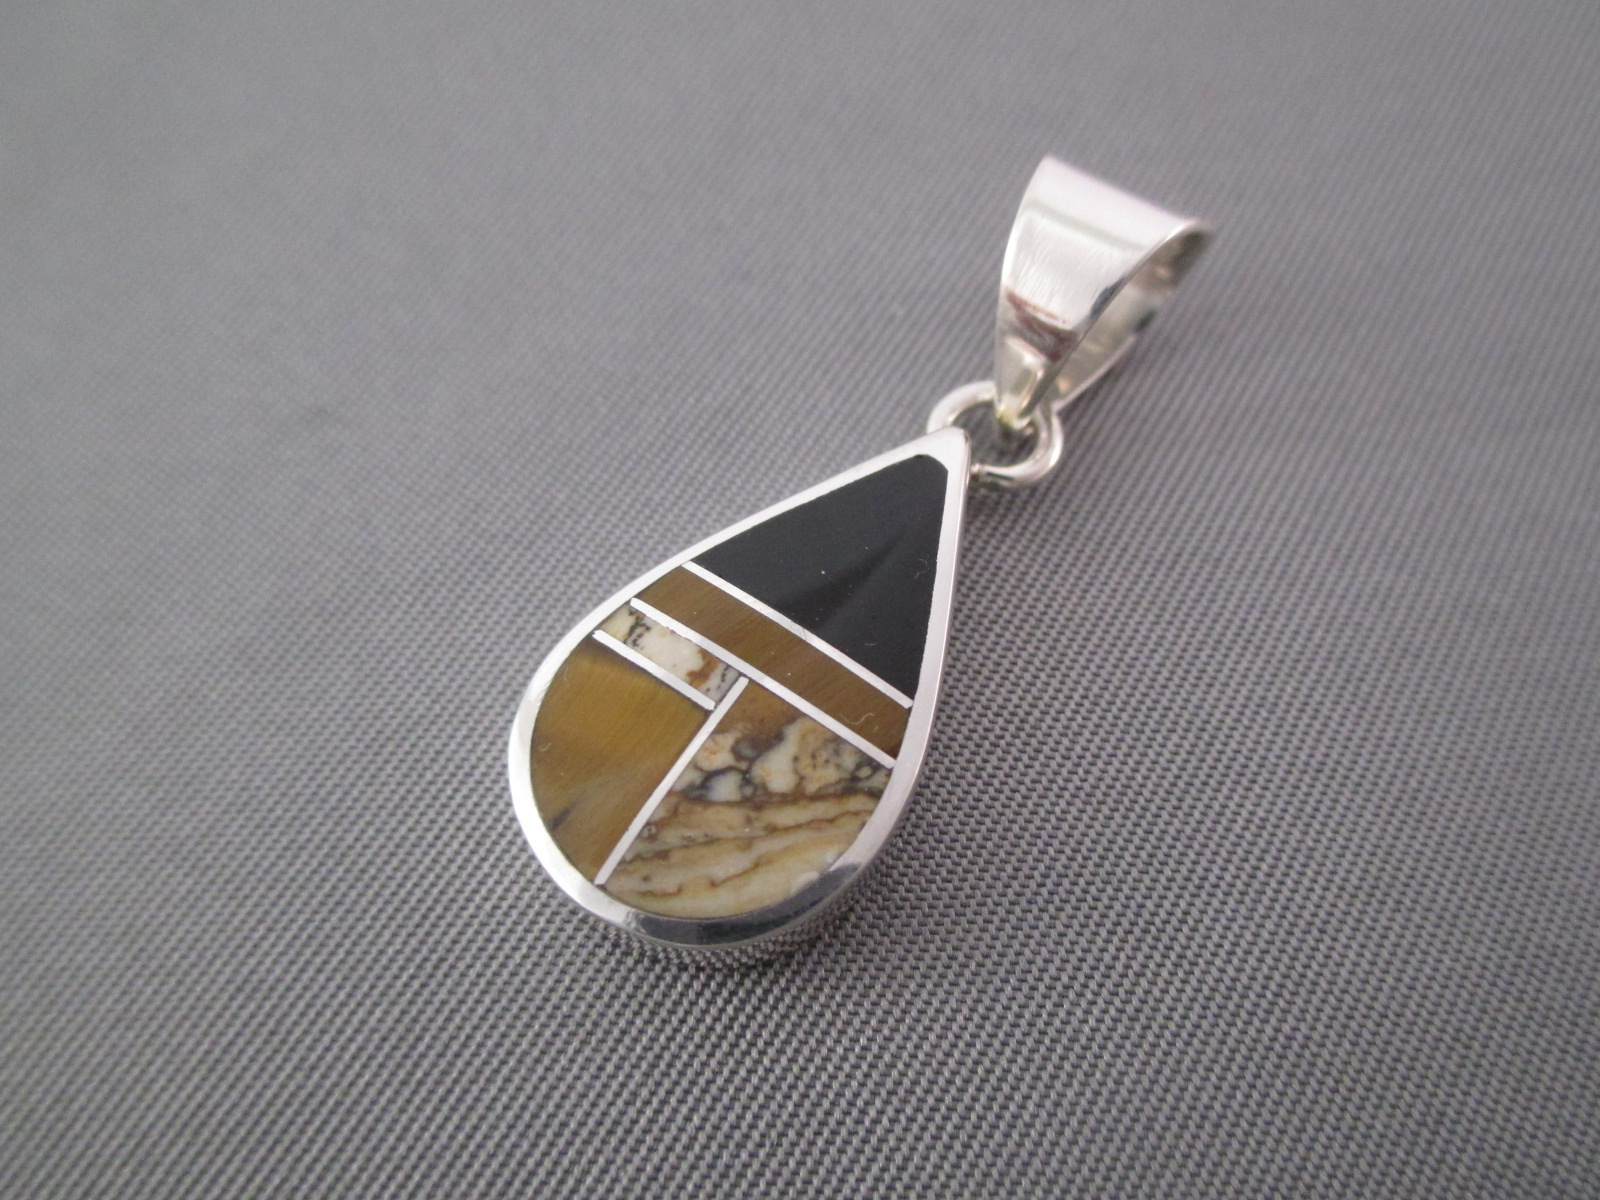 Native American Jewelry - Multi-Stone Inlay Pendant (Teardrop) by Navajo jeweler, Delphine Benally $125-